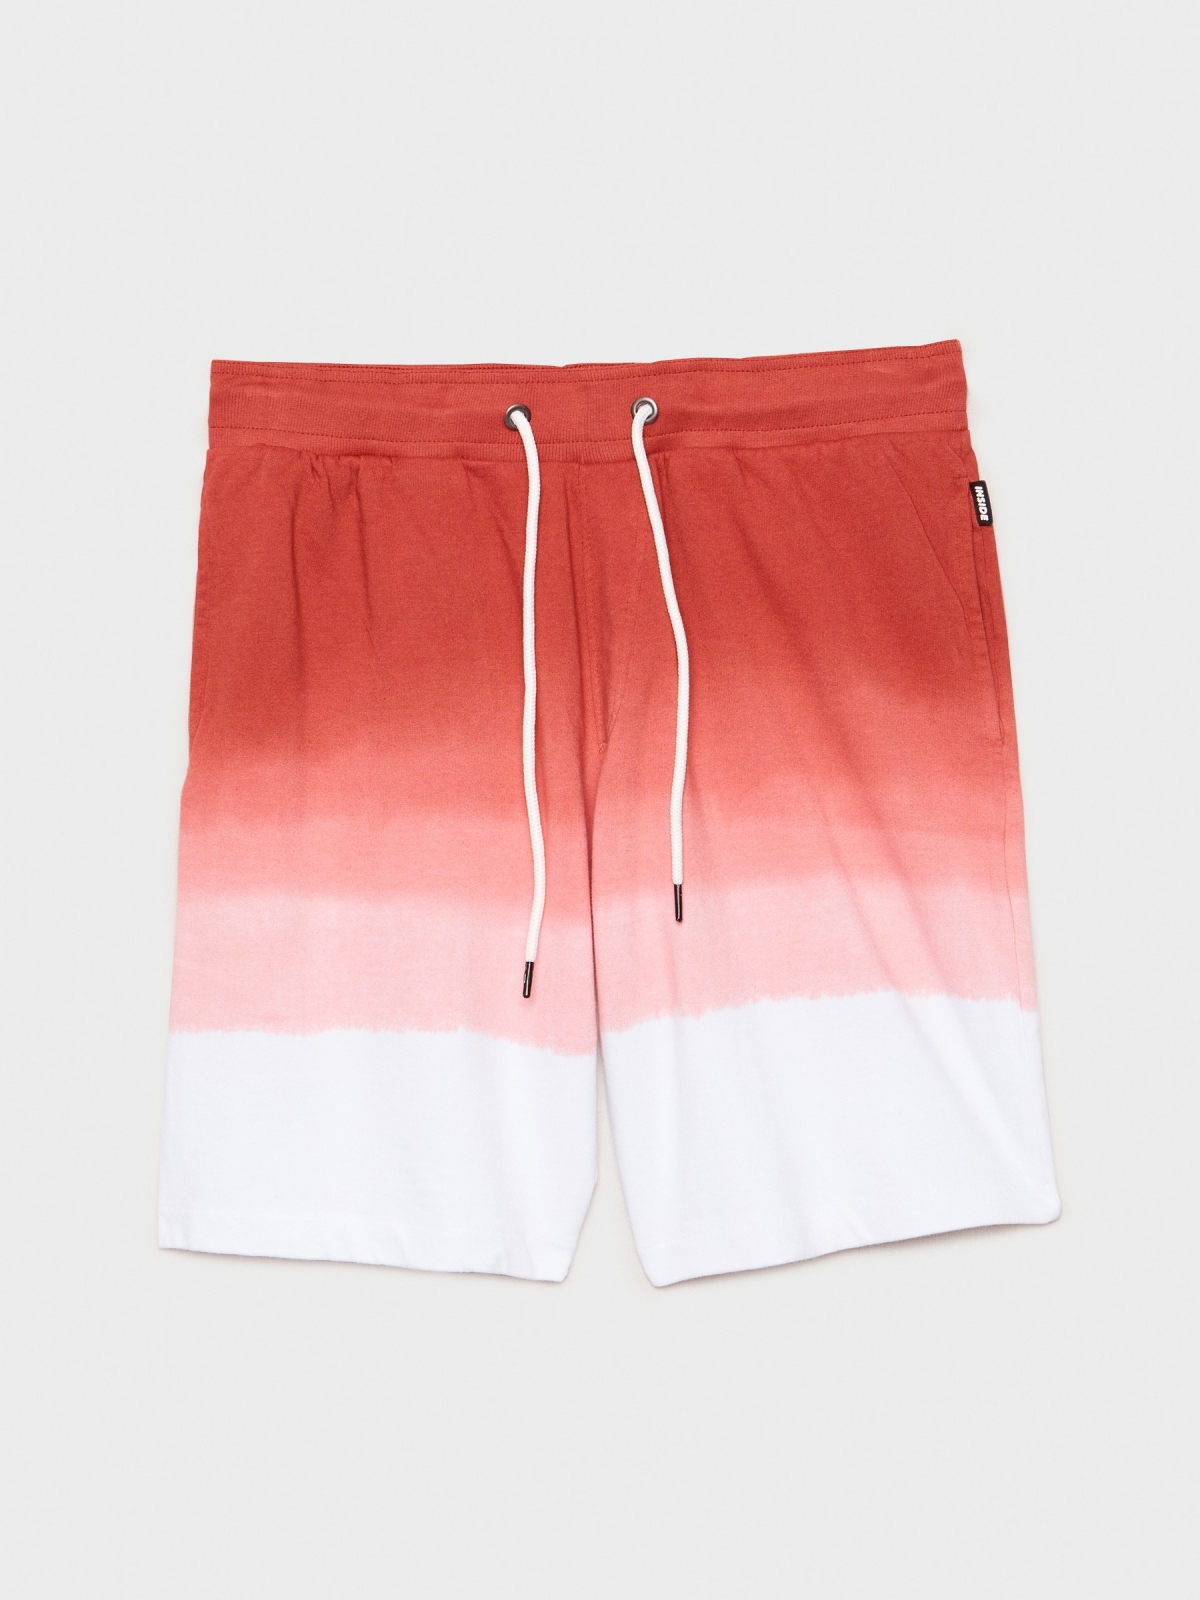  Gradient effect Bermuda shorts orangish red